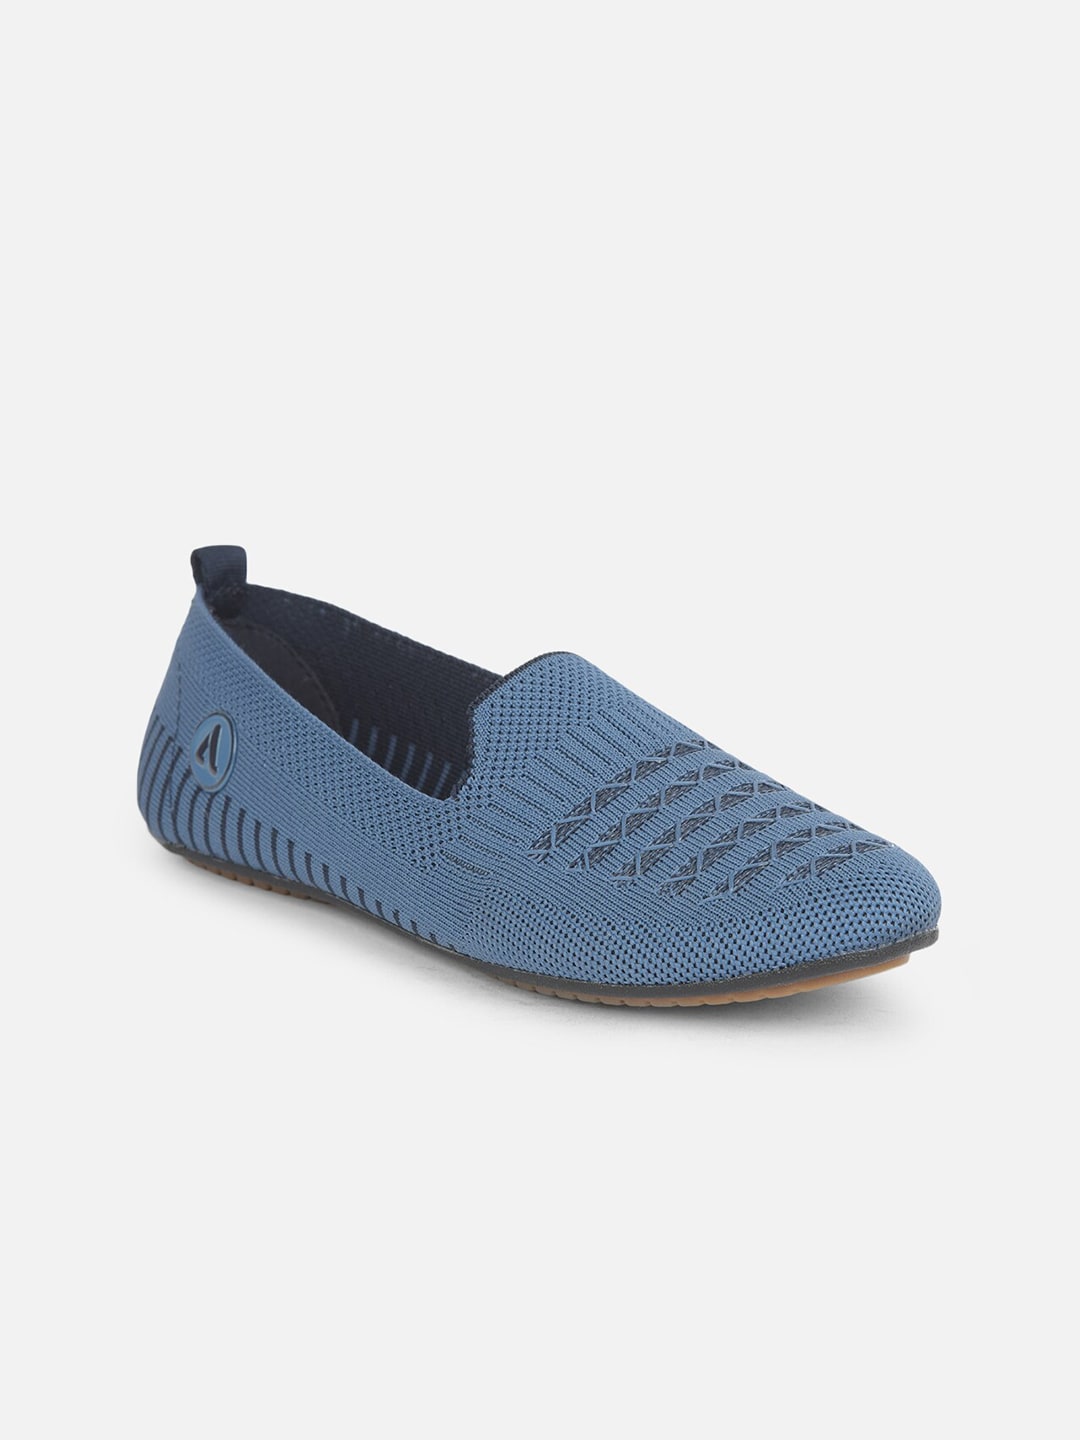 Aqualite Women Blue Mesh Walking Shoes Price in India